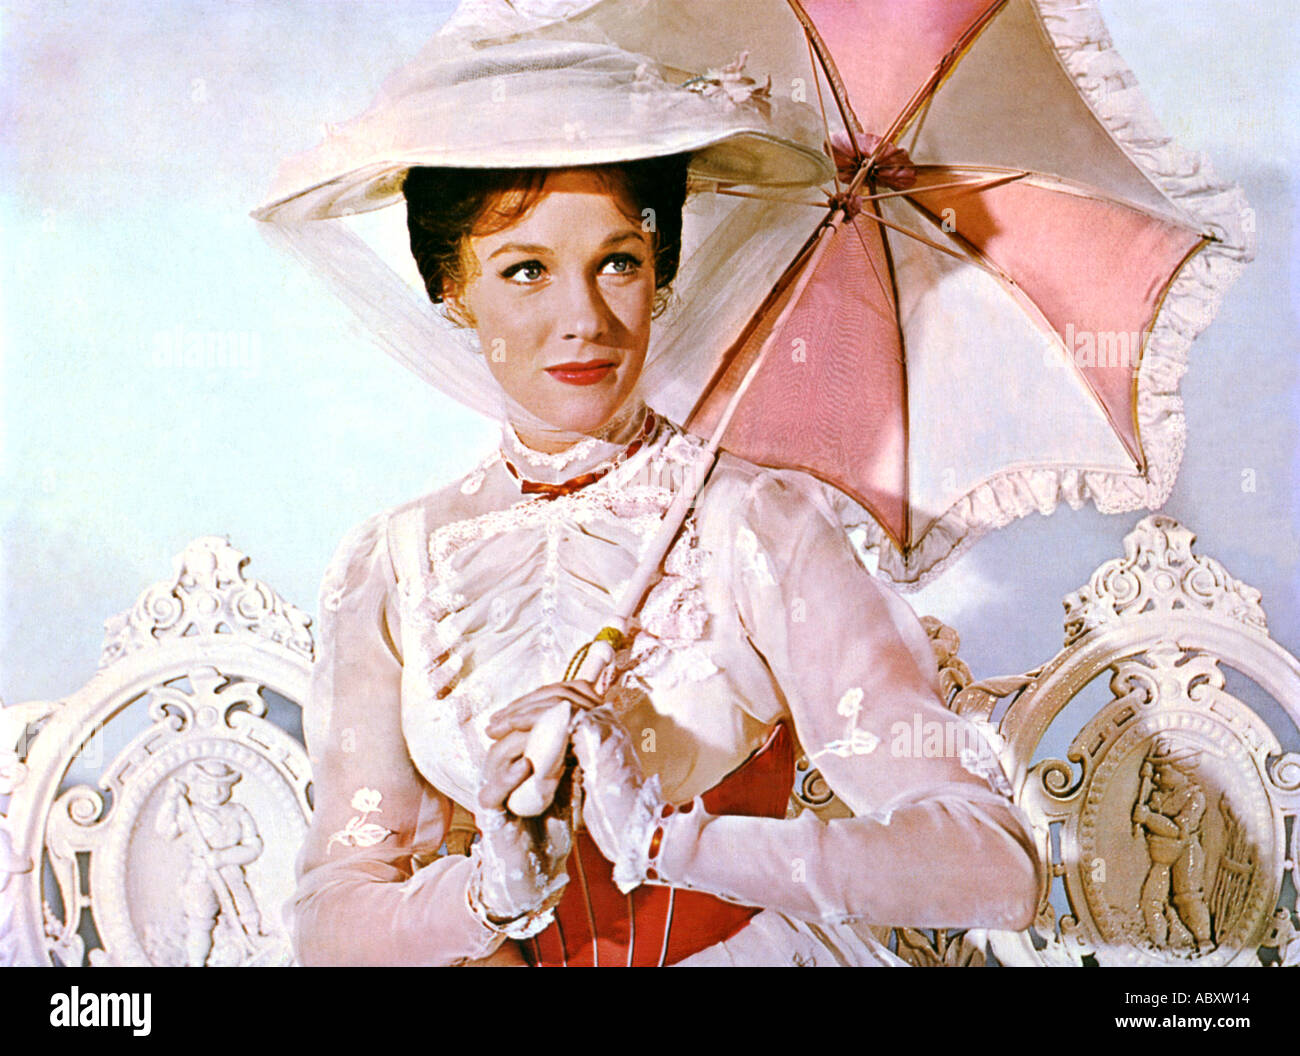 MARY POPPINS 1964 film de Disney avec Julie Andrews Banque D'Images